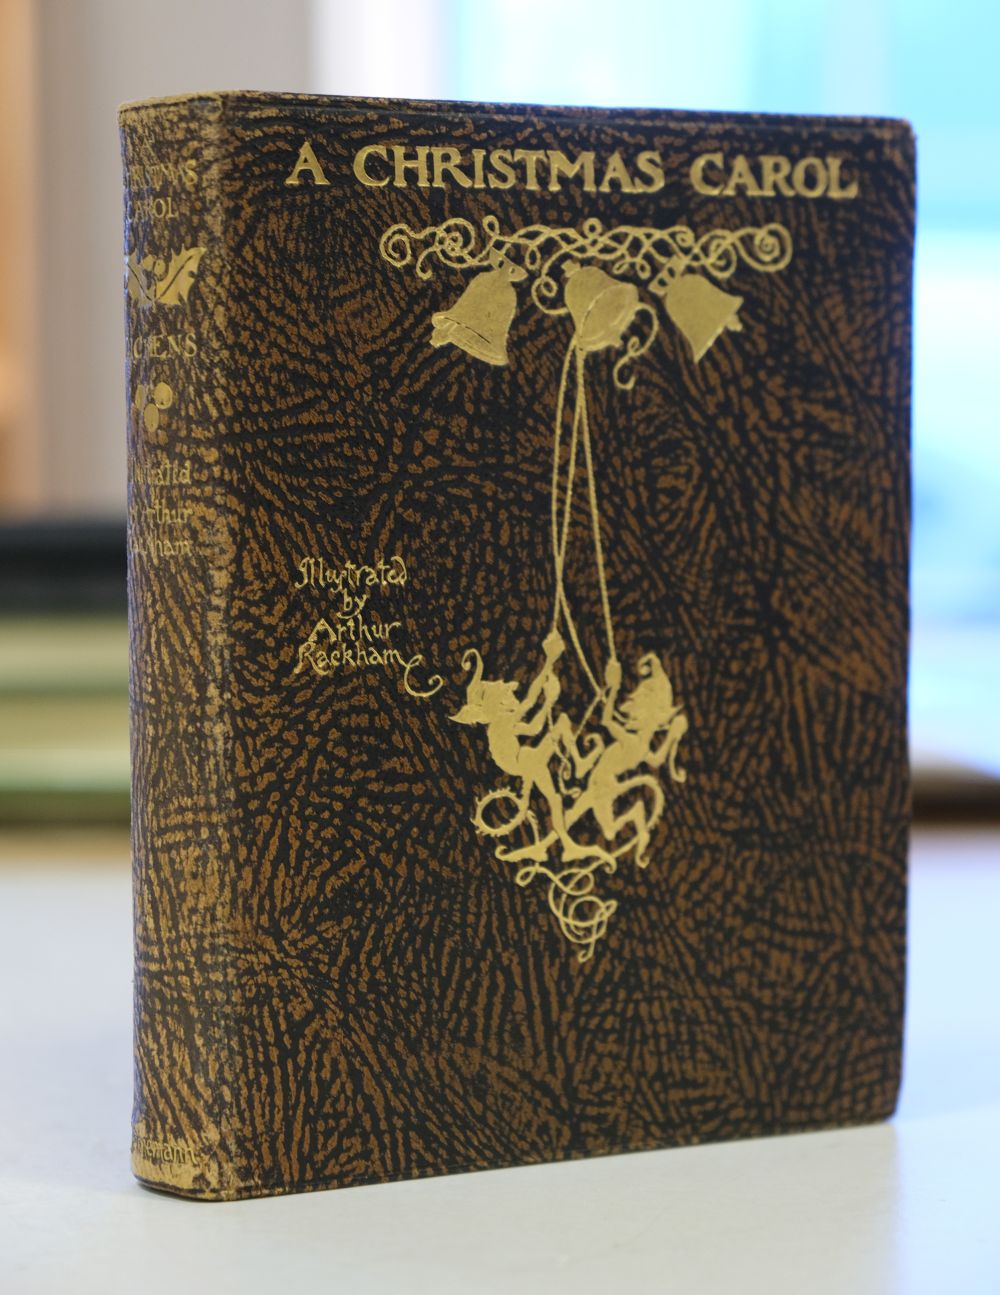 Rackham (Arthur, illustrator). A Christmas Carol, deluxe binding, 1915 - Image 3 of 8